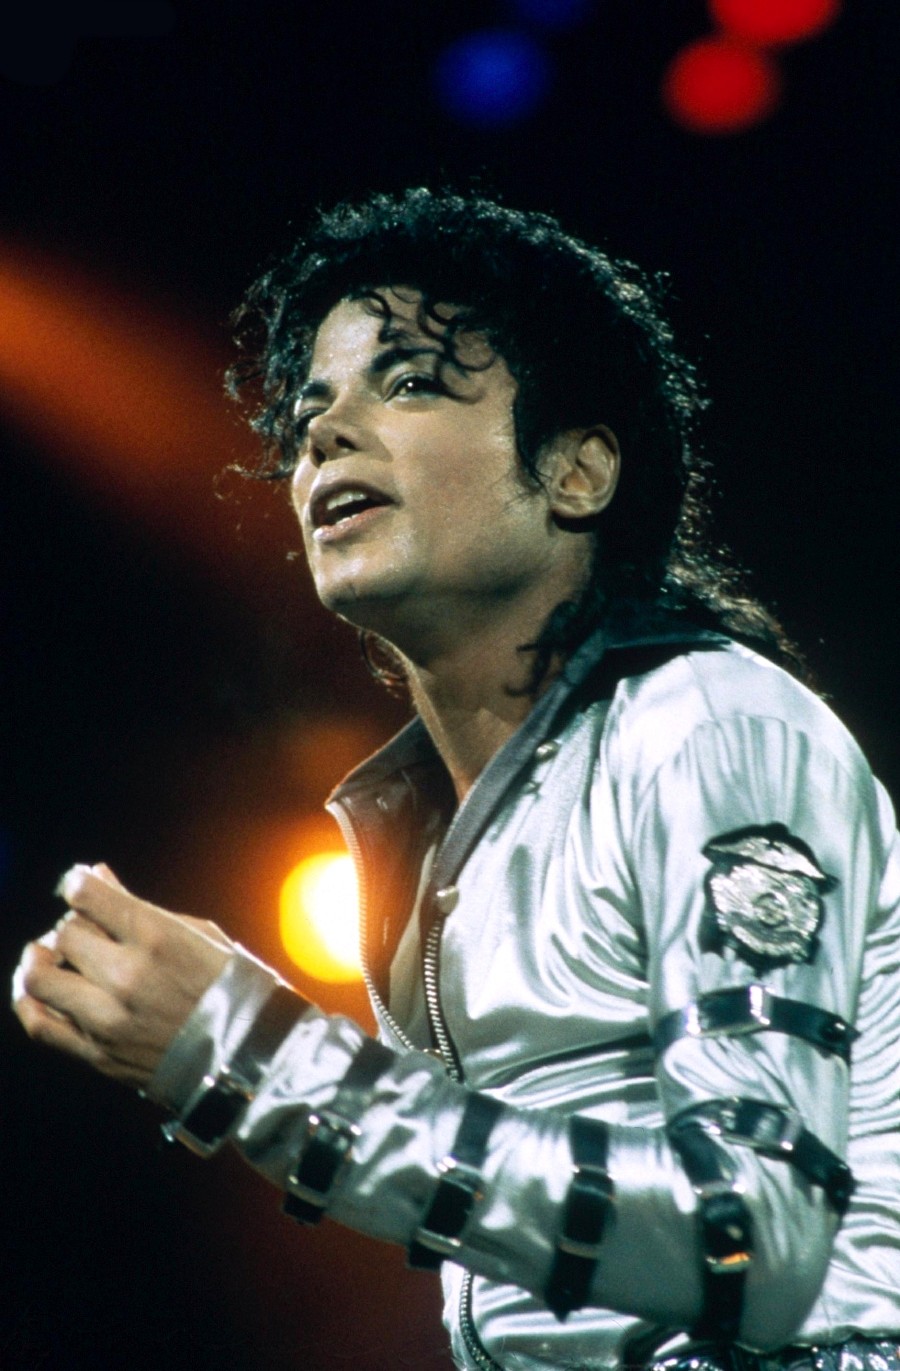 Michael Jackson photo 532 of 980 pics, wallpaper - photo #175152 ...